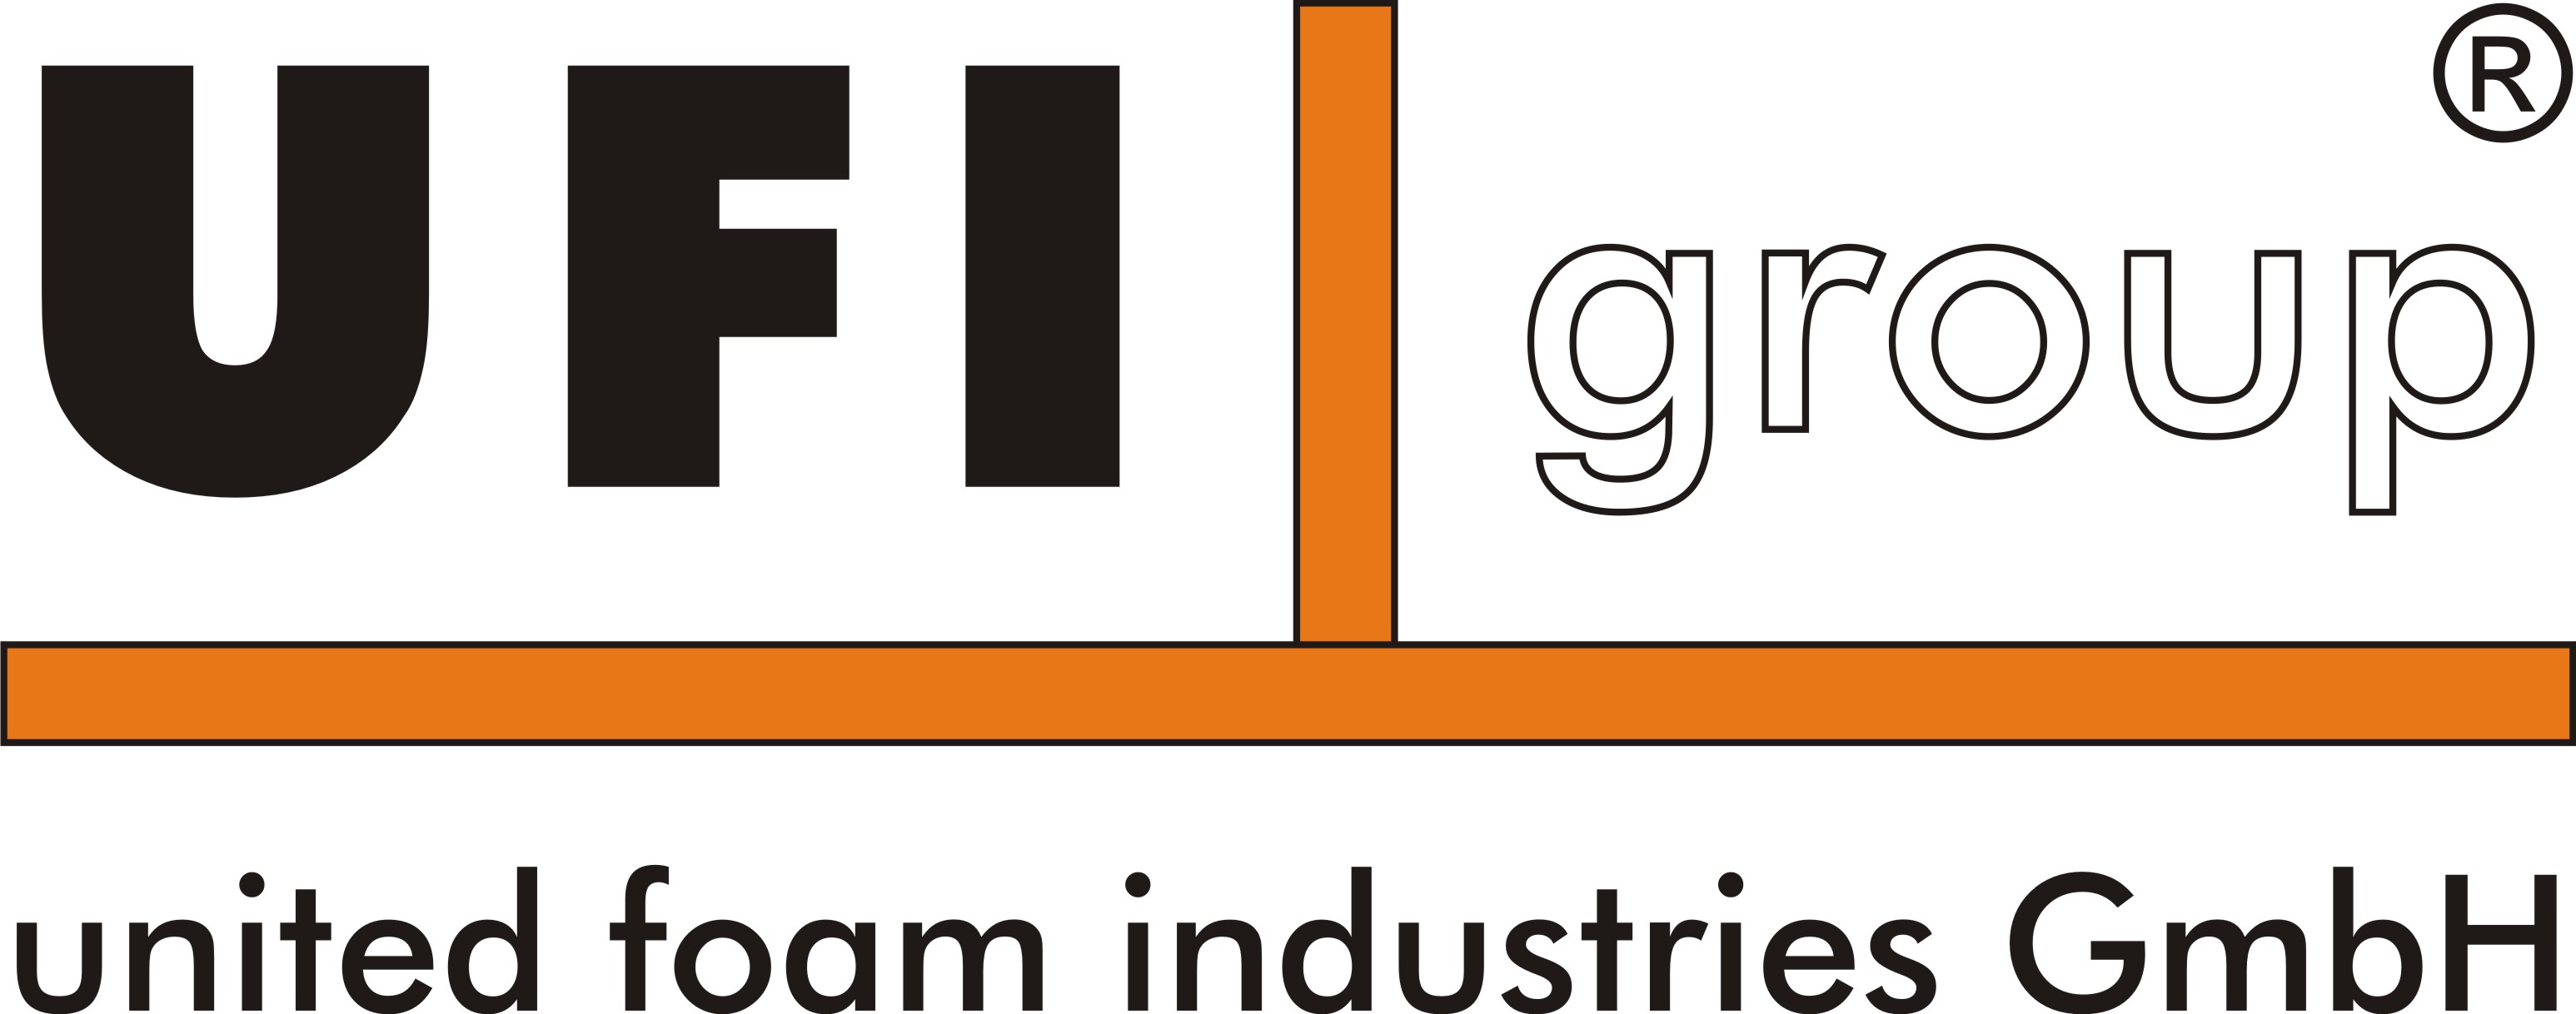 United Foam Industries GmbH